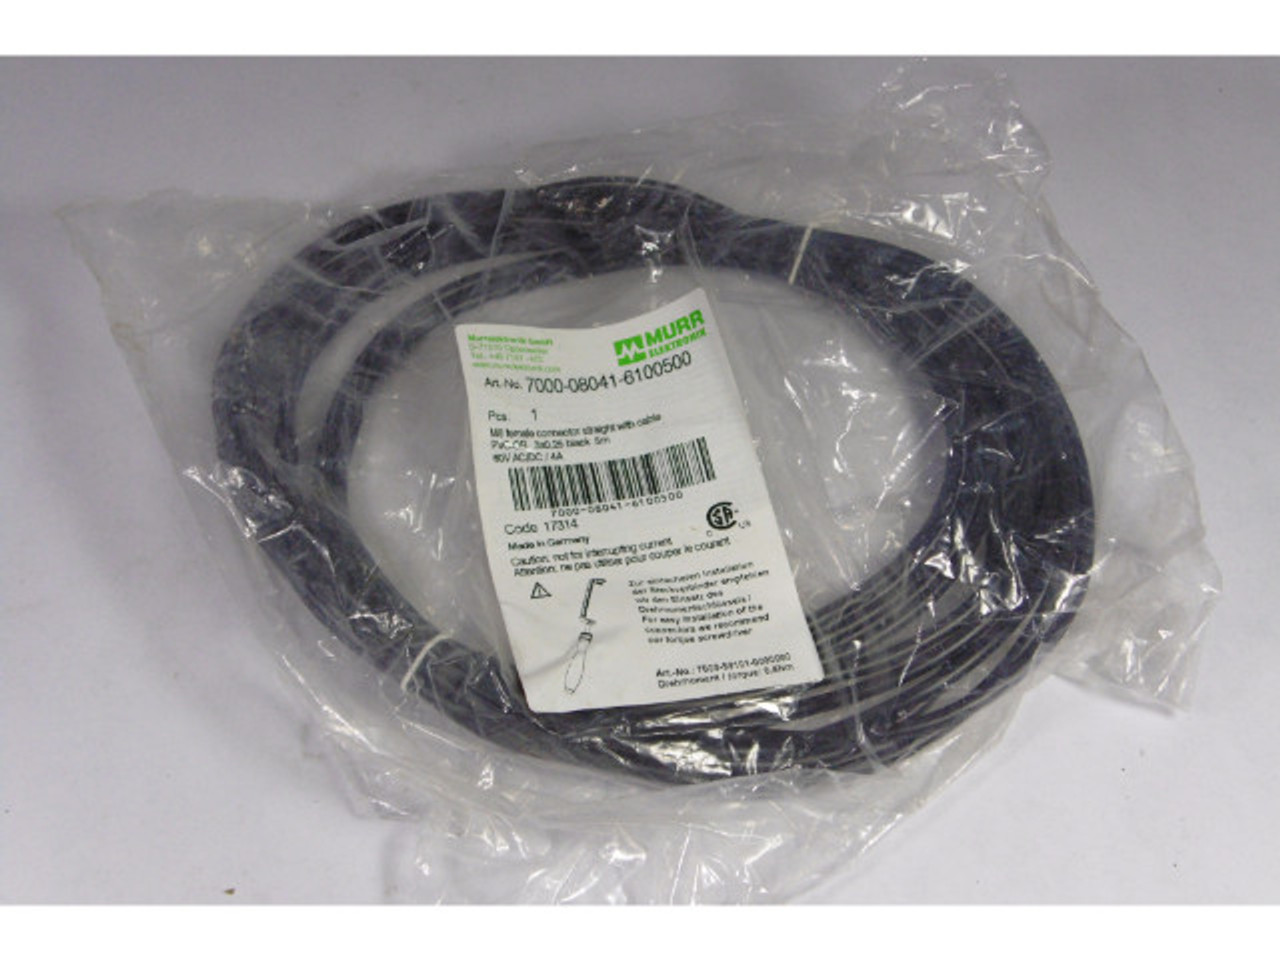 Murrelektronik 7000-08041-6100500 M8 Female 90-deg With Cable ! NWB !